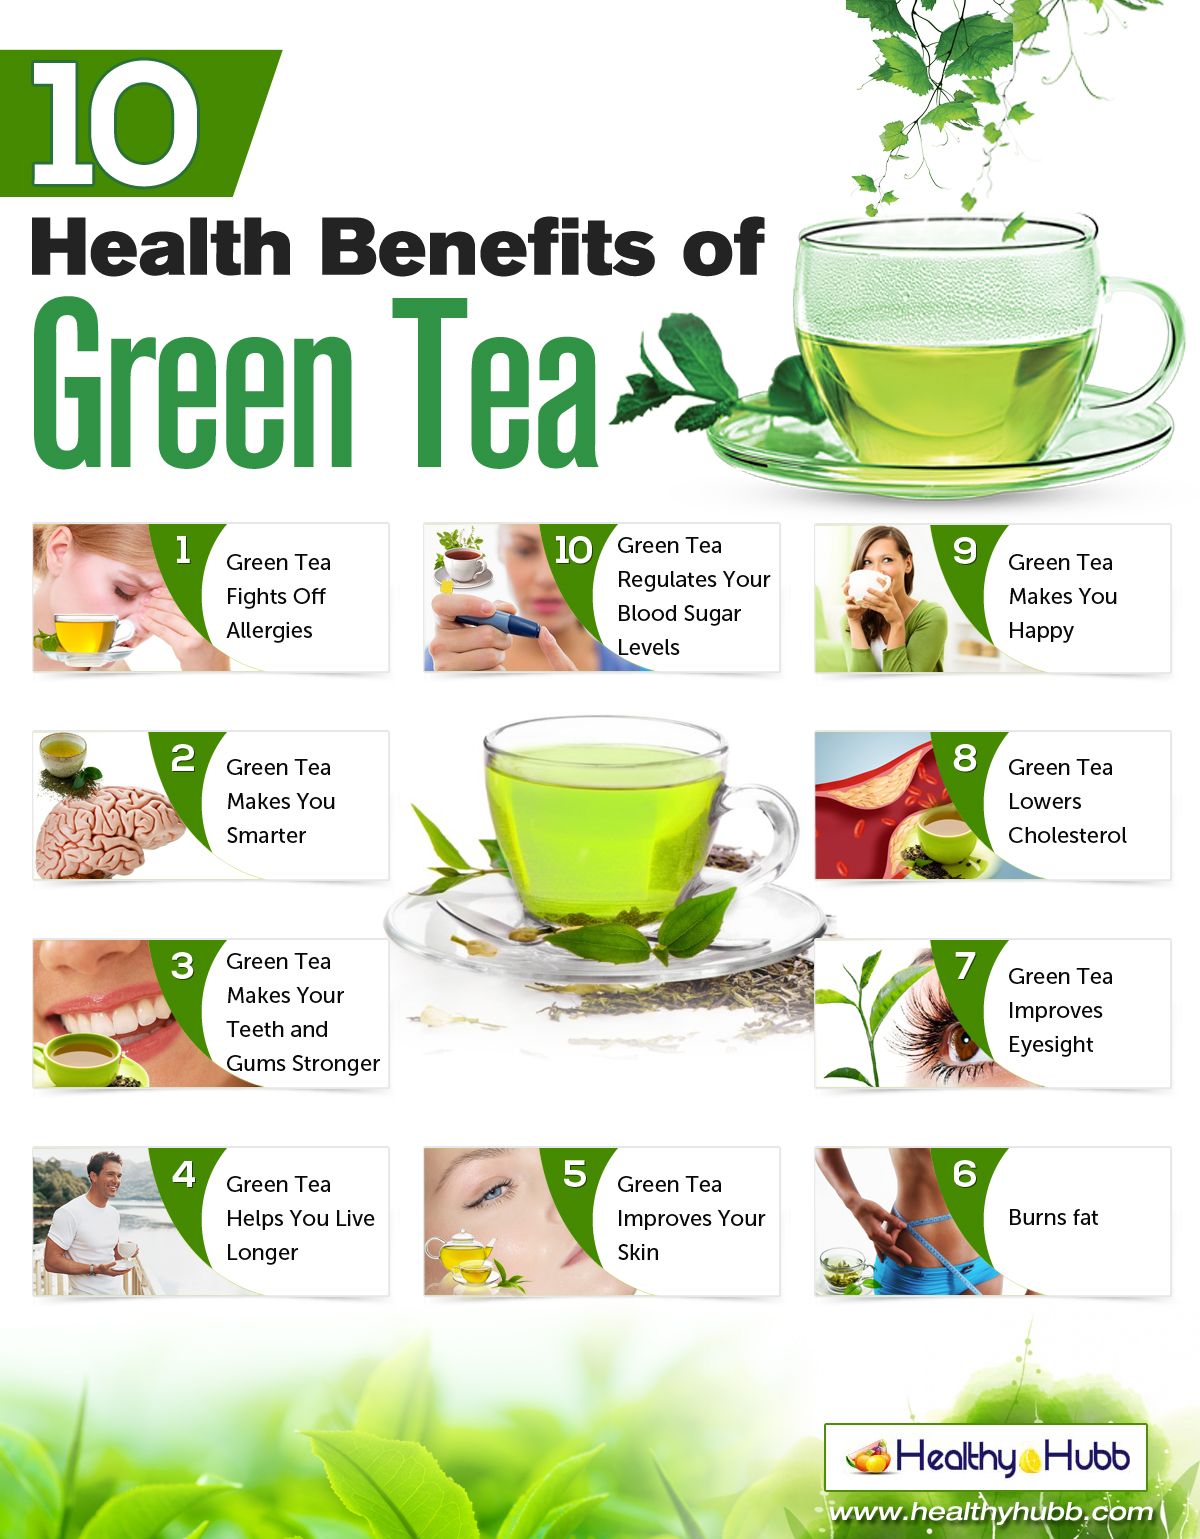 Health Benefits of Drinking Green Tea 111903 - Health Benefits of Drinking Green Tea